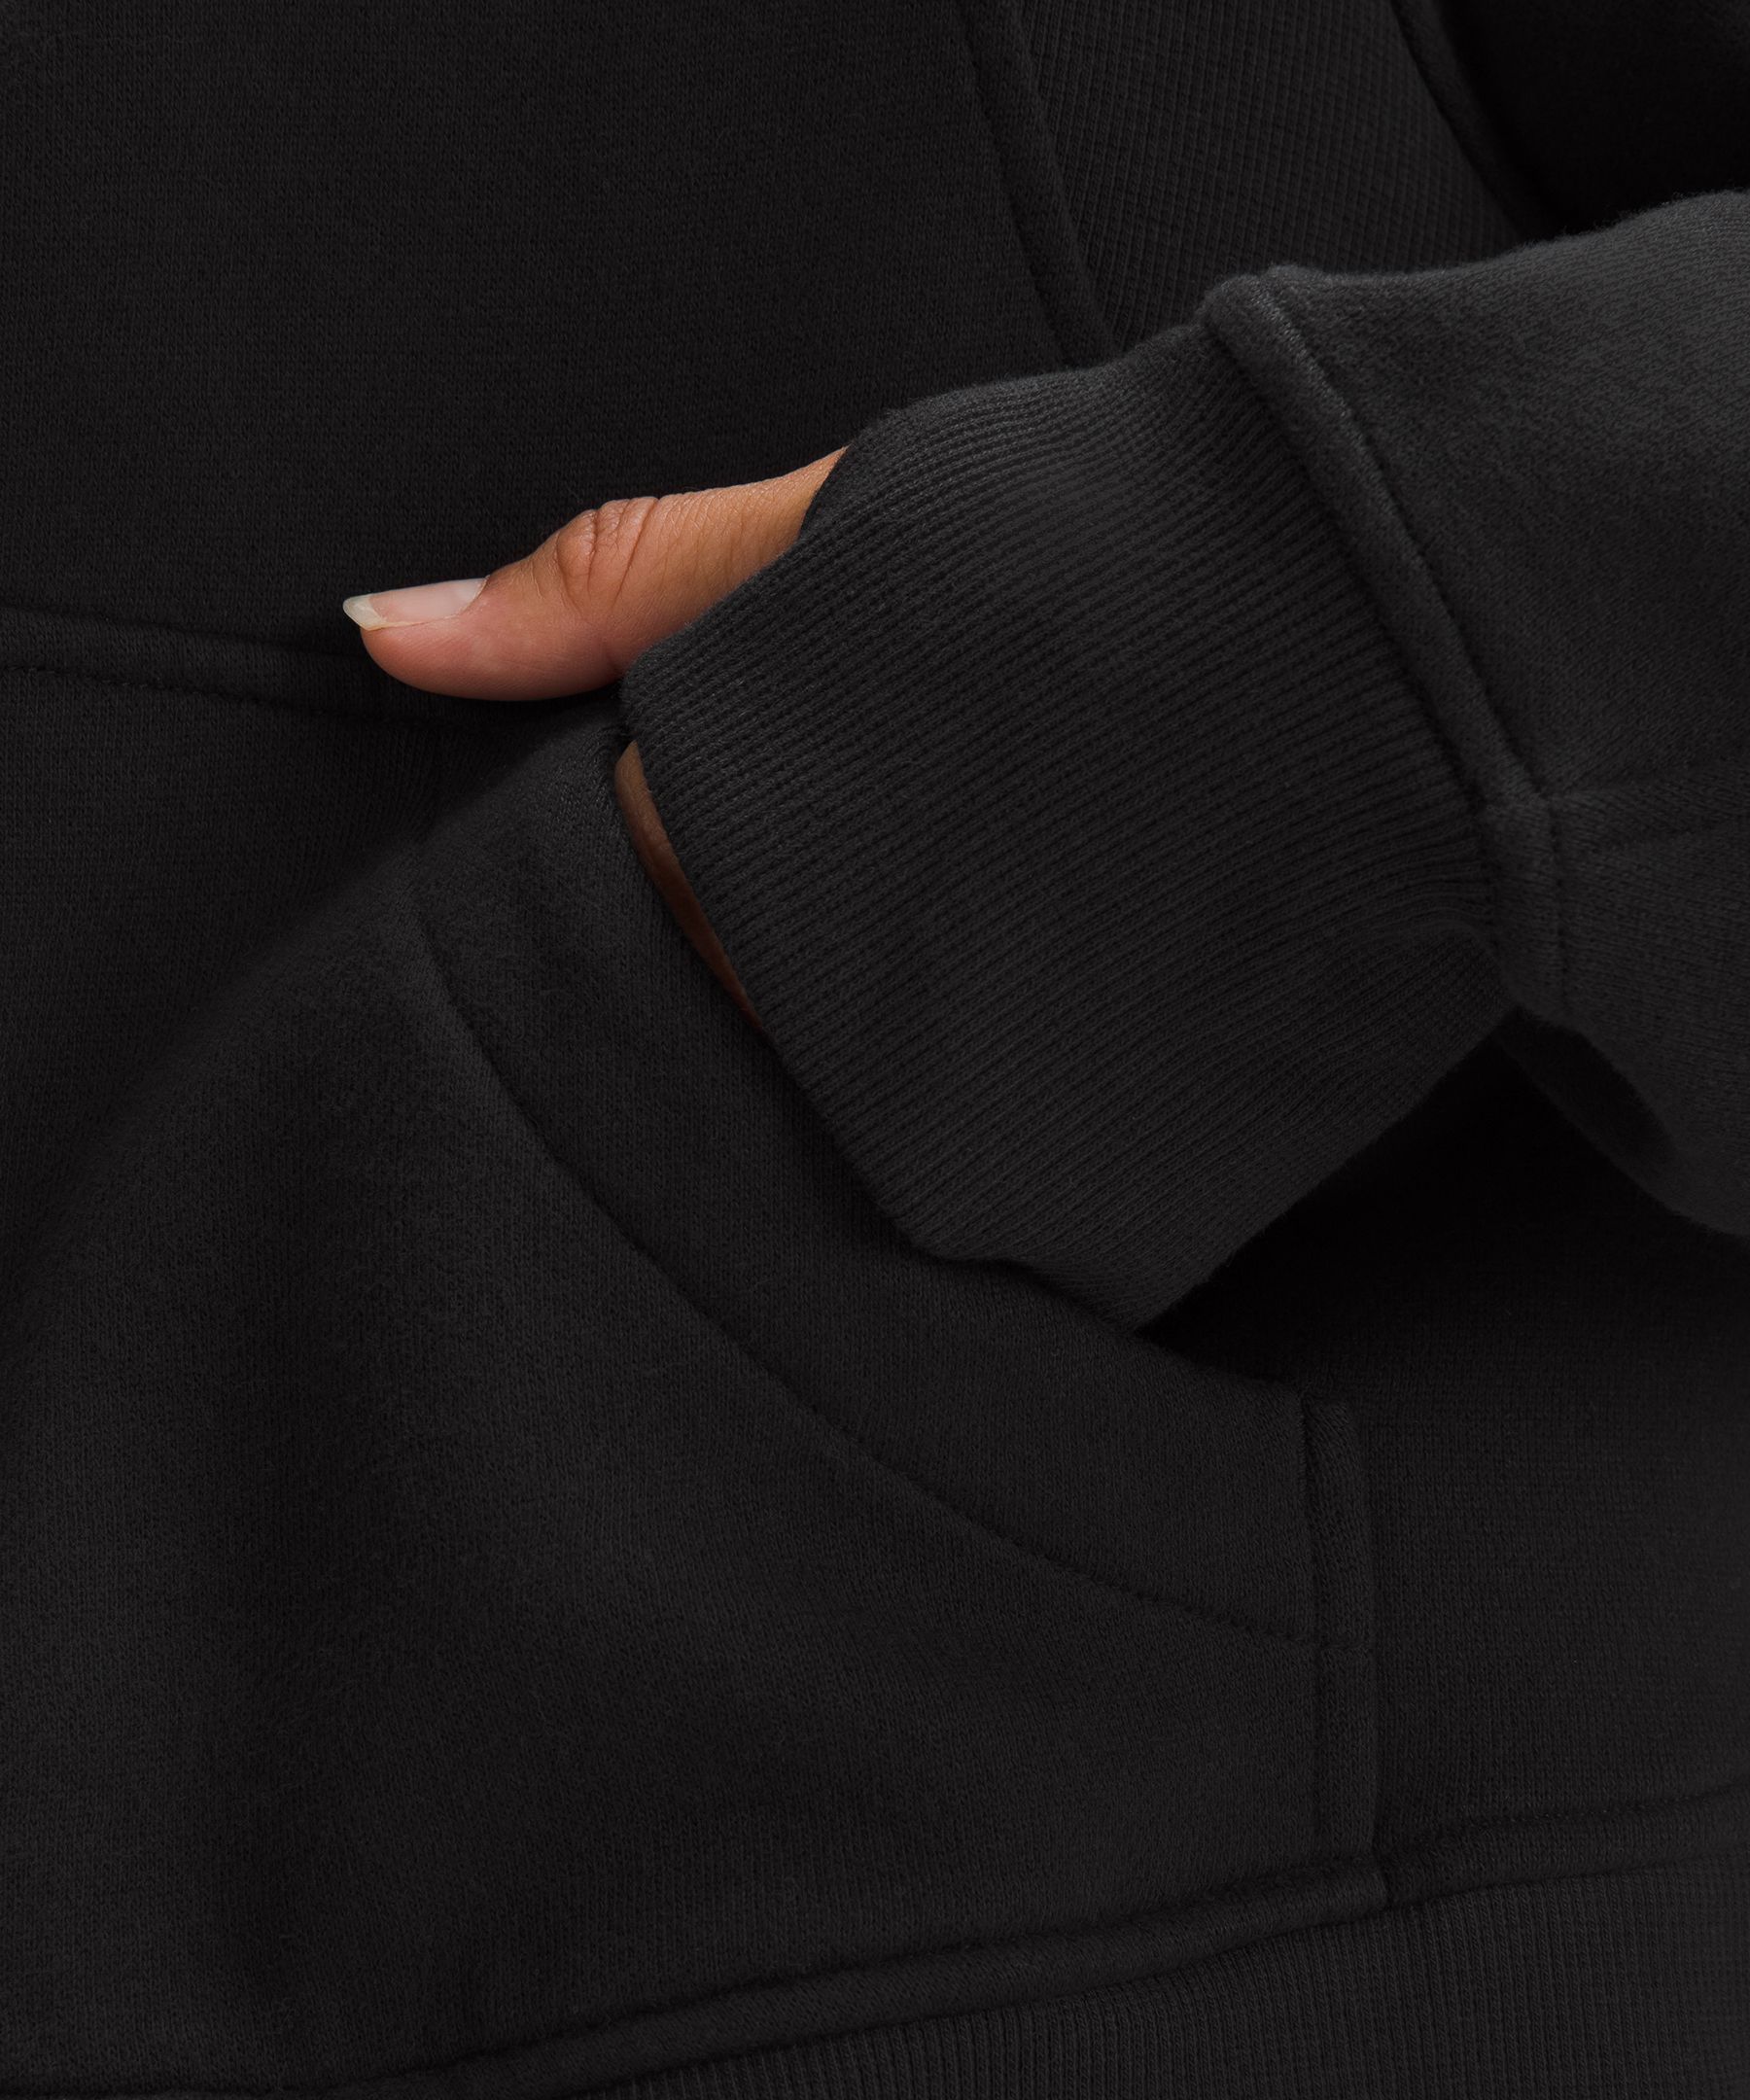 NWT LULULEMON SCUBA oversized full zip hoodie jacket Desert Sun women's  XS/S NEW $199.98 - PicClick